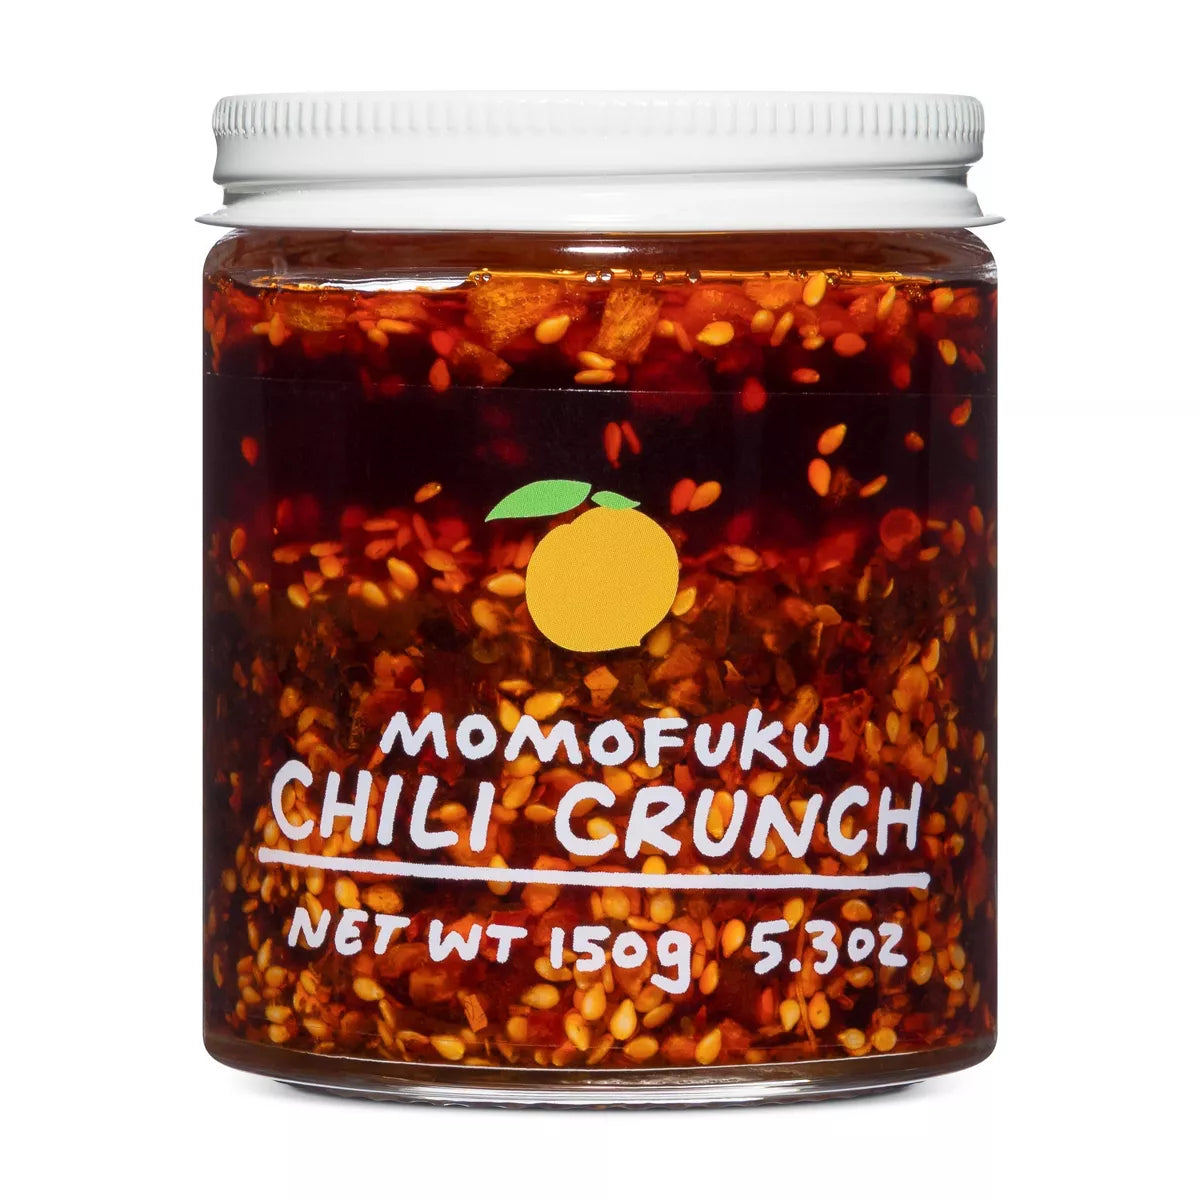 Momofuku Chili Crunch - Space Camp